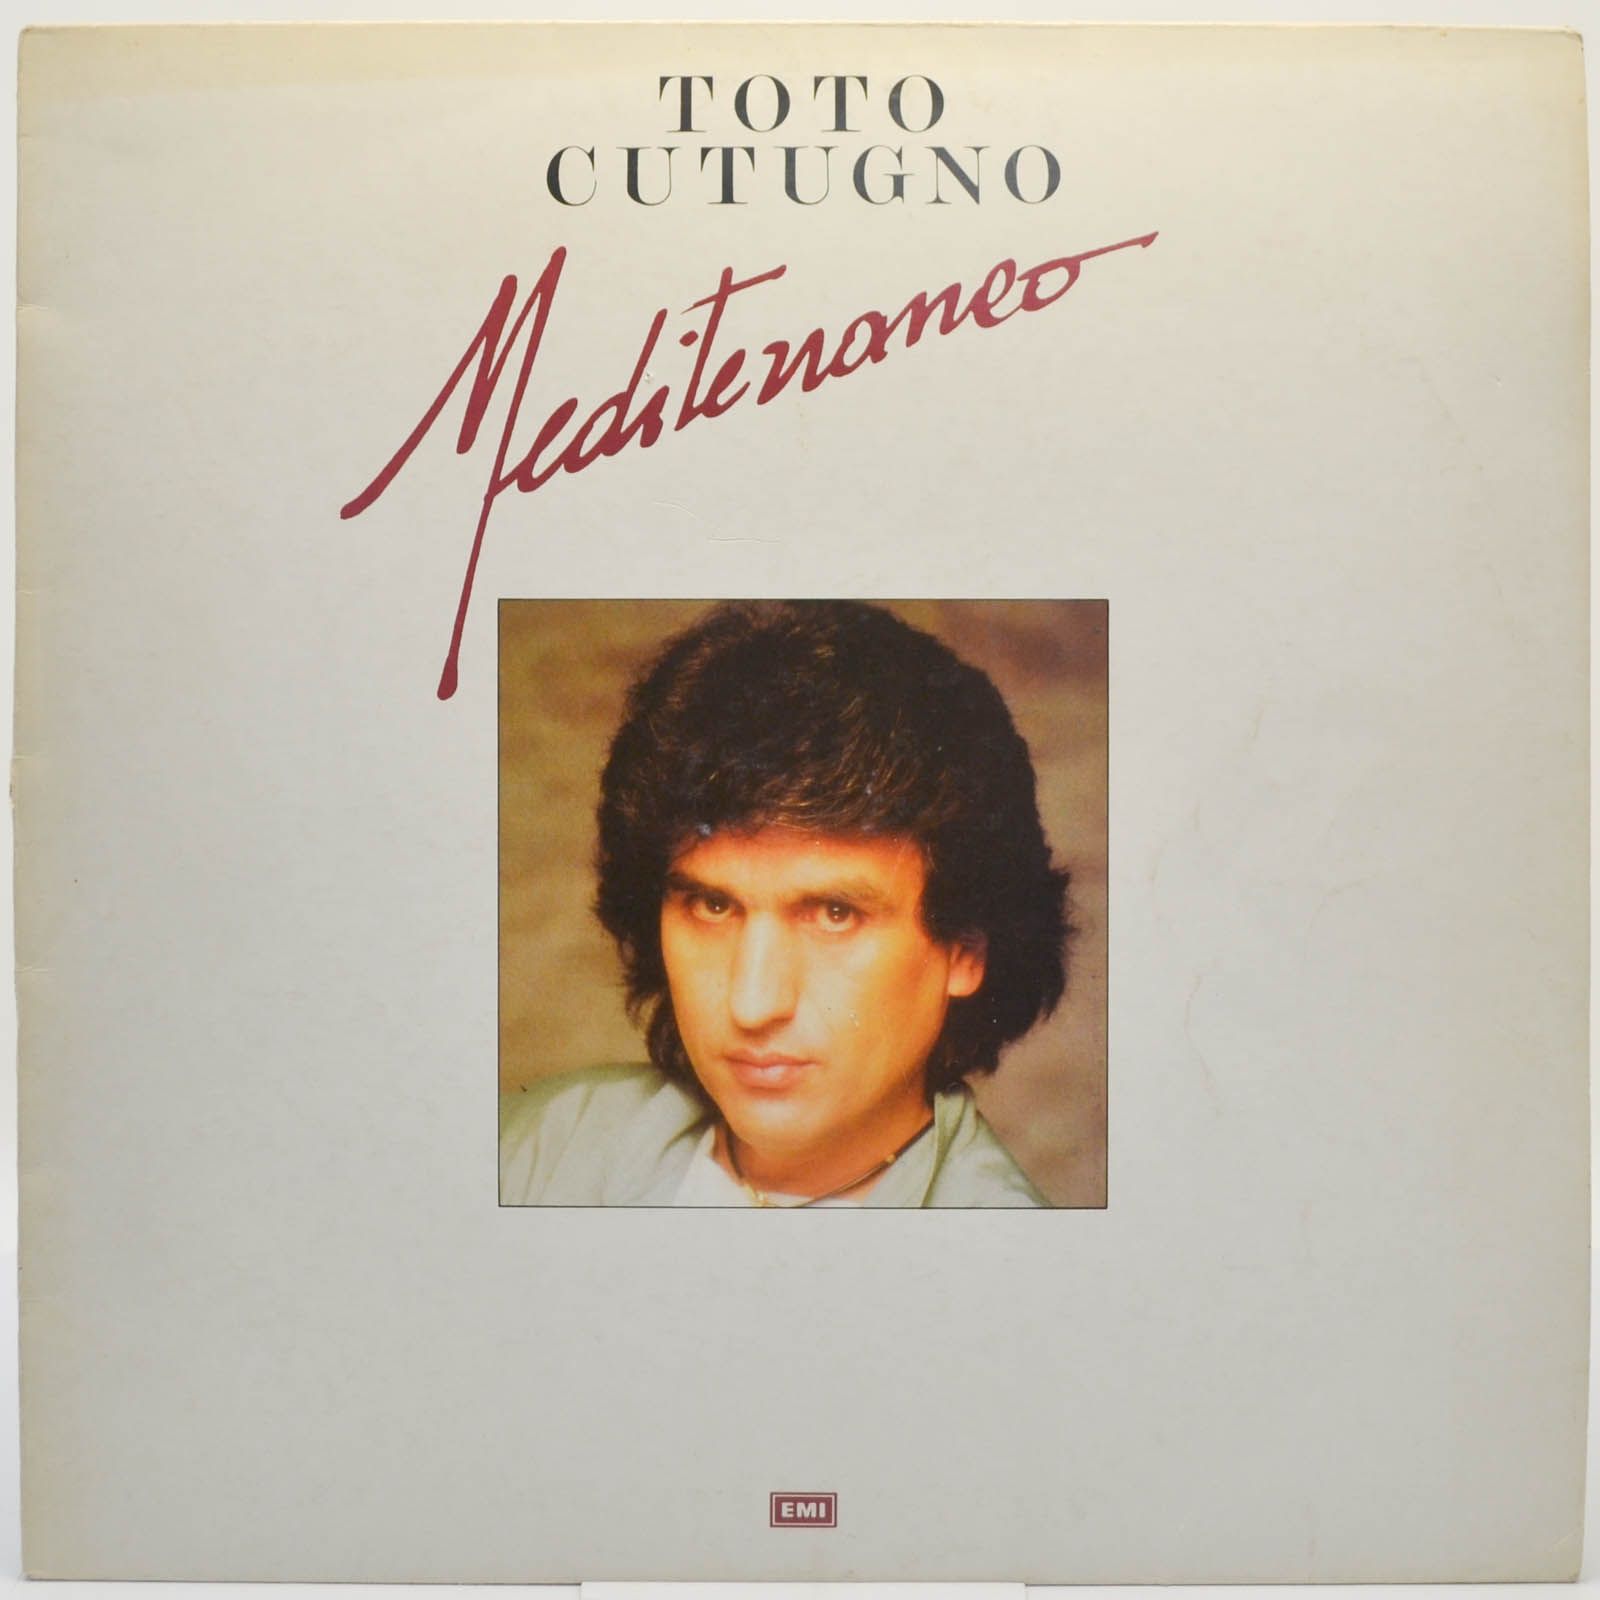 Toto Cutugno — Mediterraneo (Italy), 1987